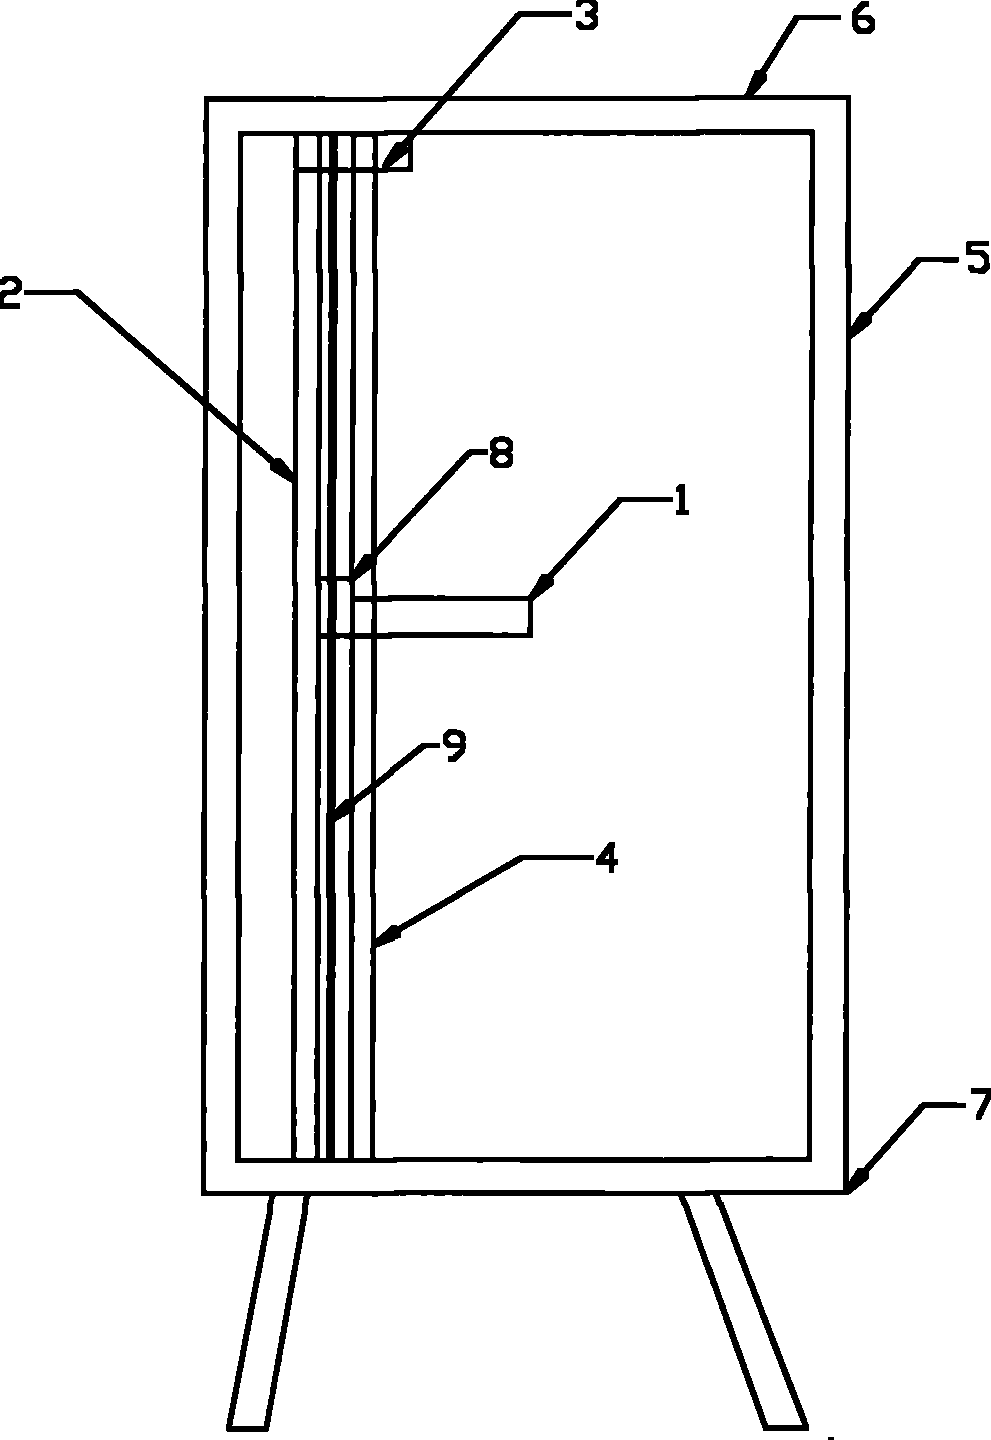 Thermal pattern assay apparatus